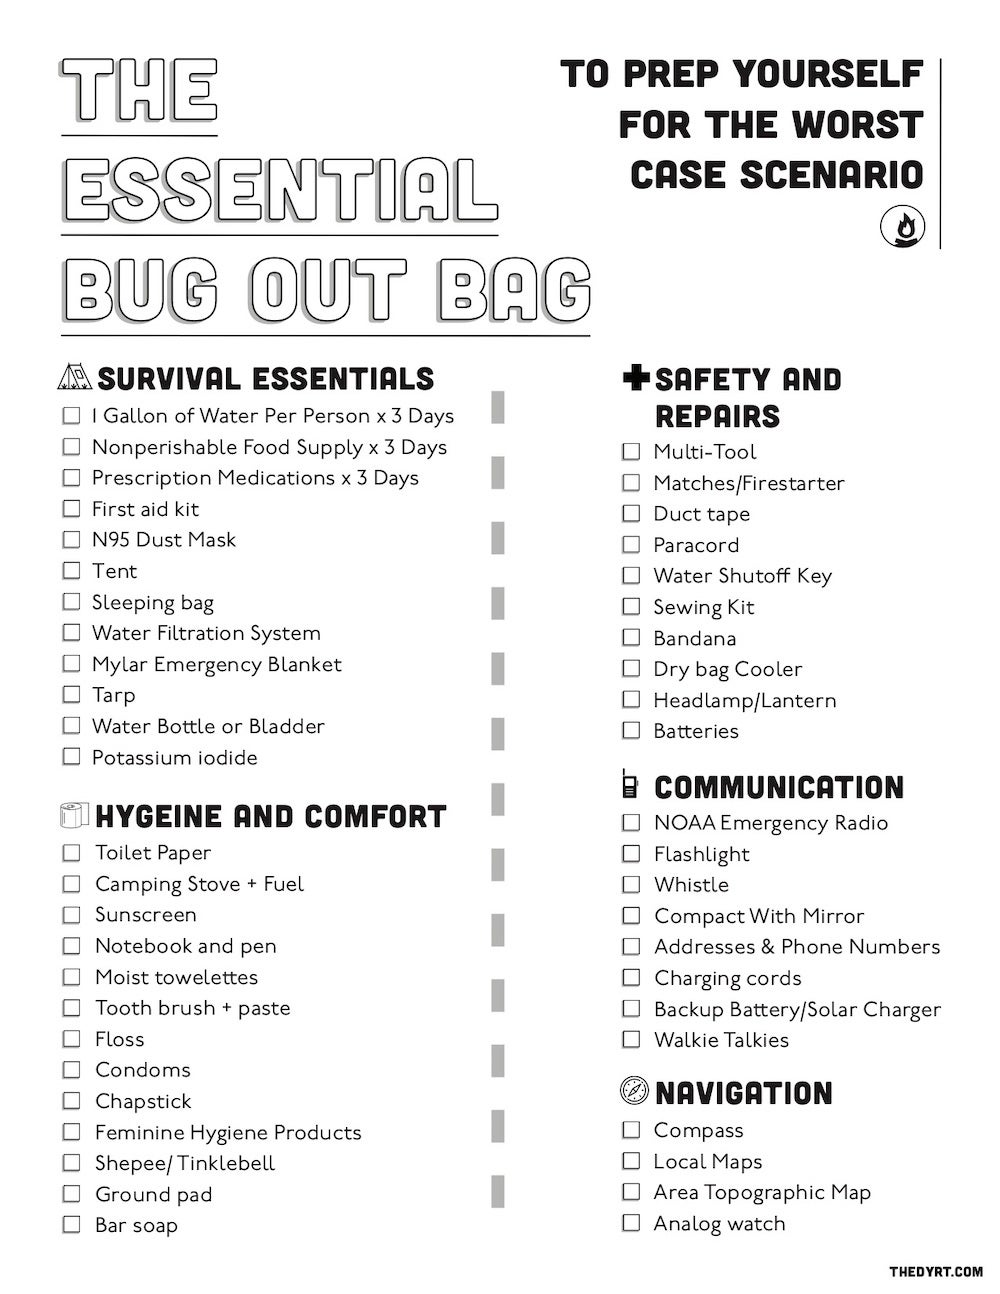 Comprehensive Checklist for Essential Bug Out Bag Items